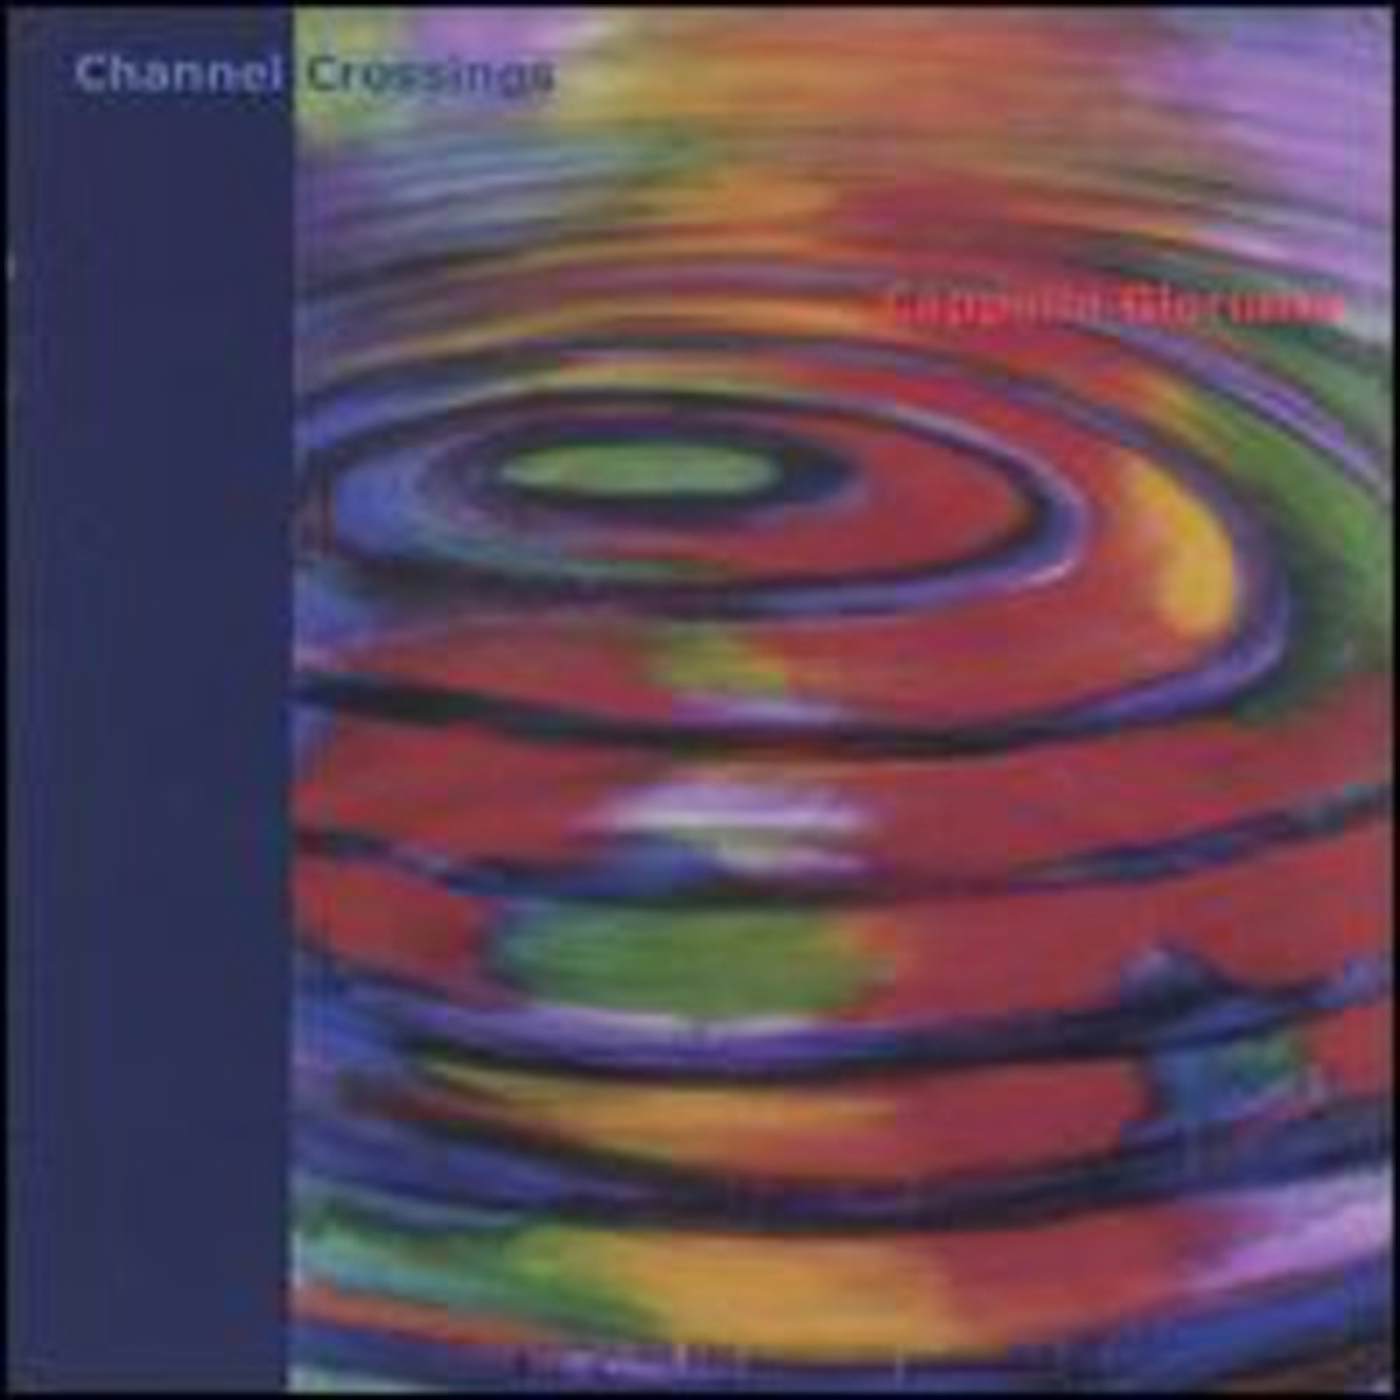 Cappella Gloriana CHANNEL CROSSINGS CD